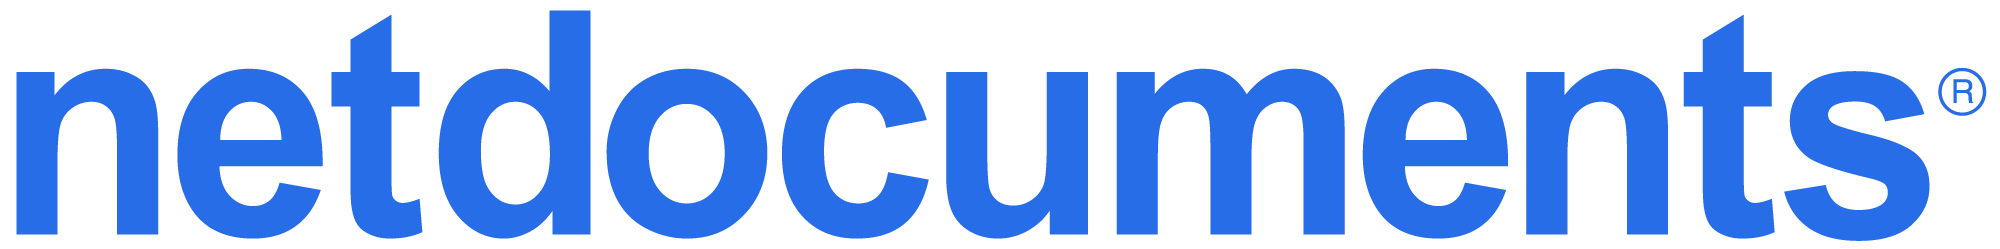 NetDocuments logo